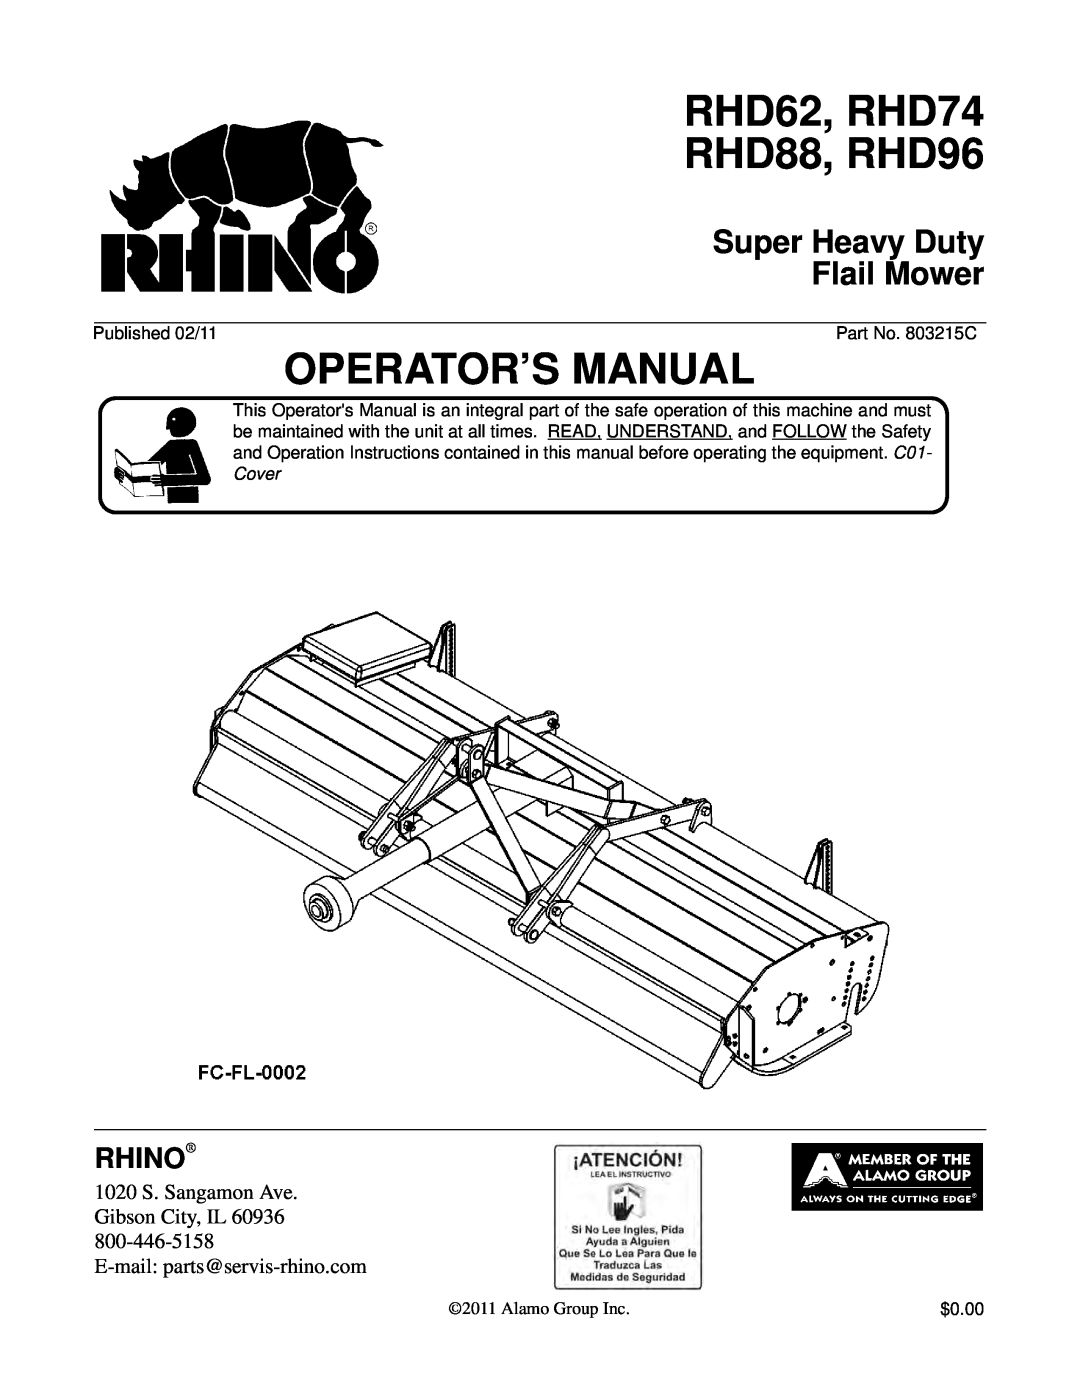 Rhino Mounts manual Super Heavy Duty Flail Mower, RHD62, RHD74 RHD88, RHD96, Operator’S Manual, Rhino 